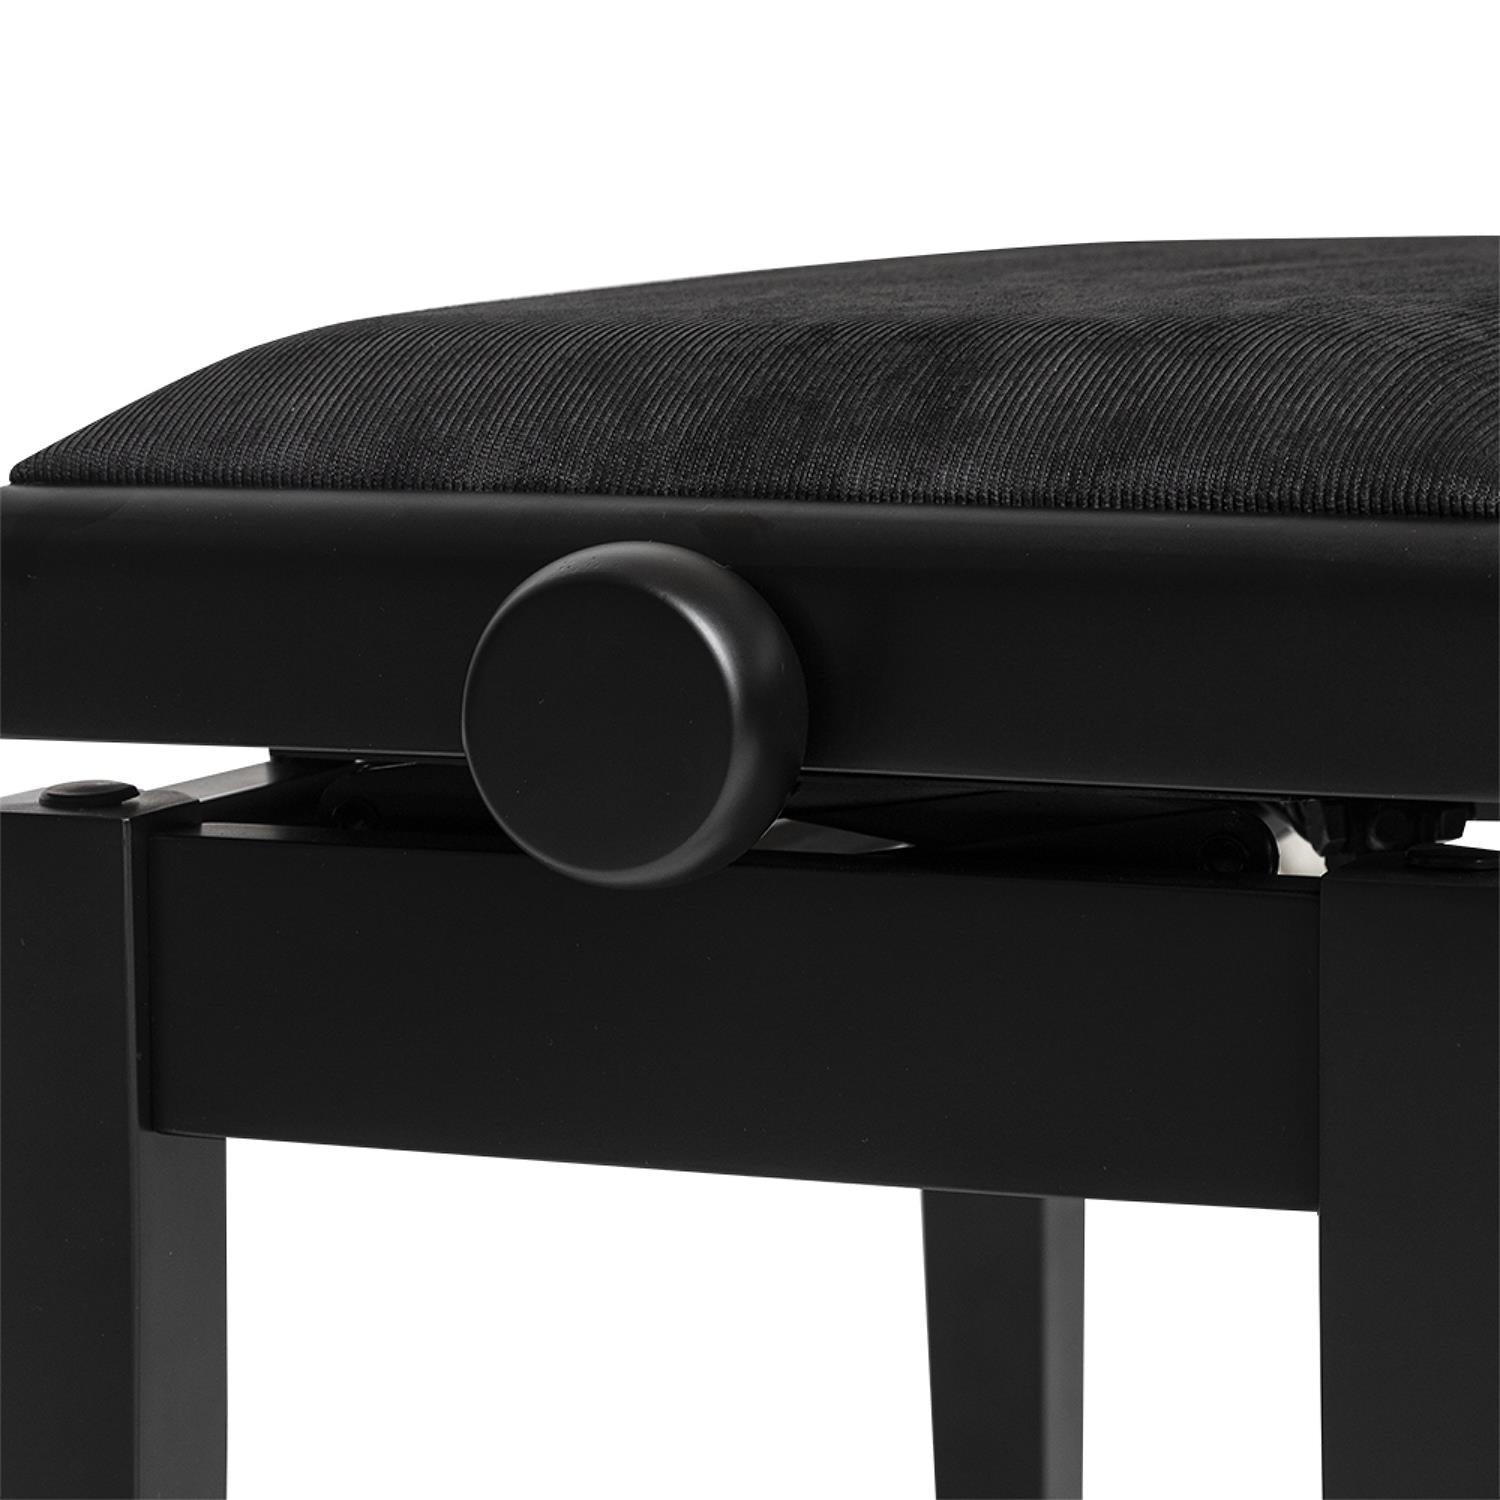 Stagg PBH 390 BKM VBK Matt Black Hydraulic Piano Bench with Velvet Top - DY Pro Audio